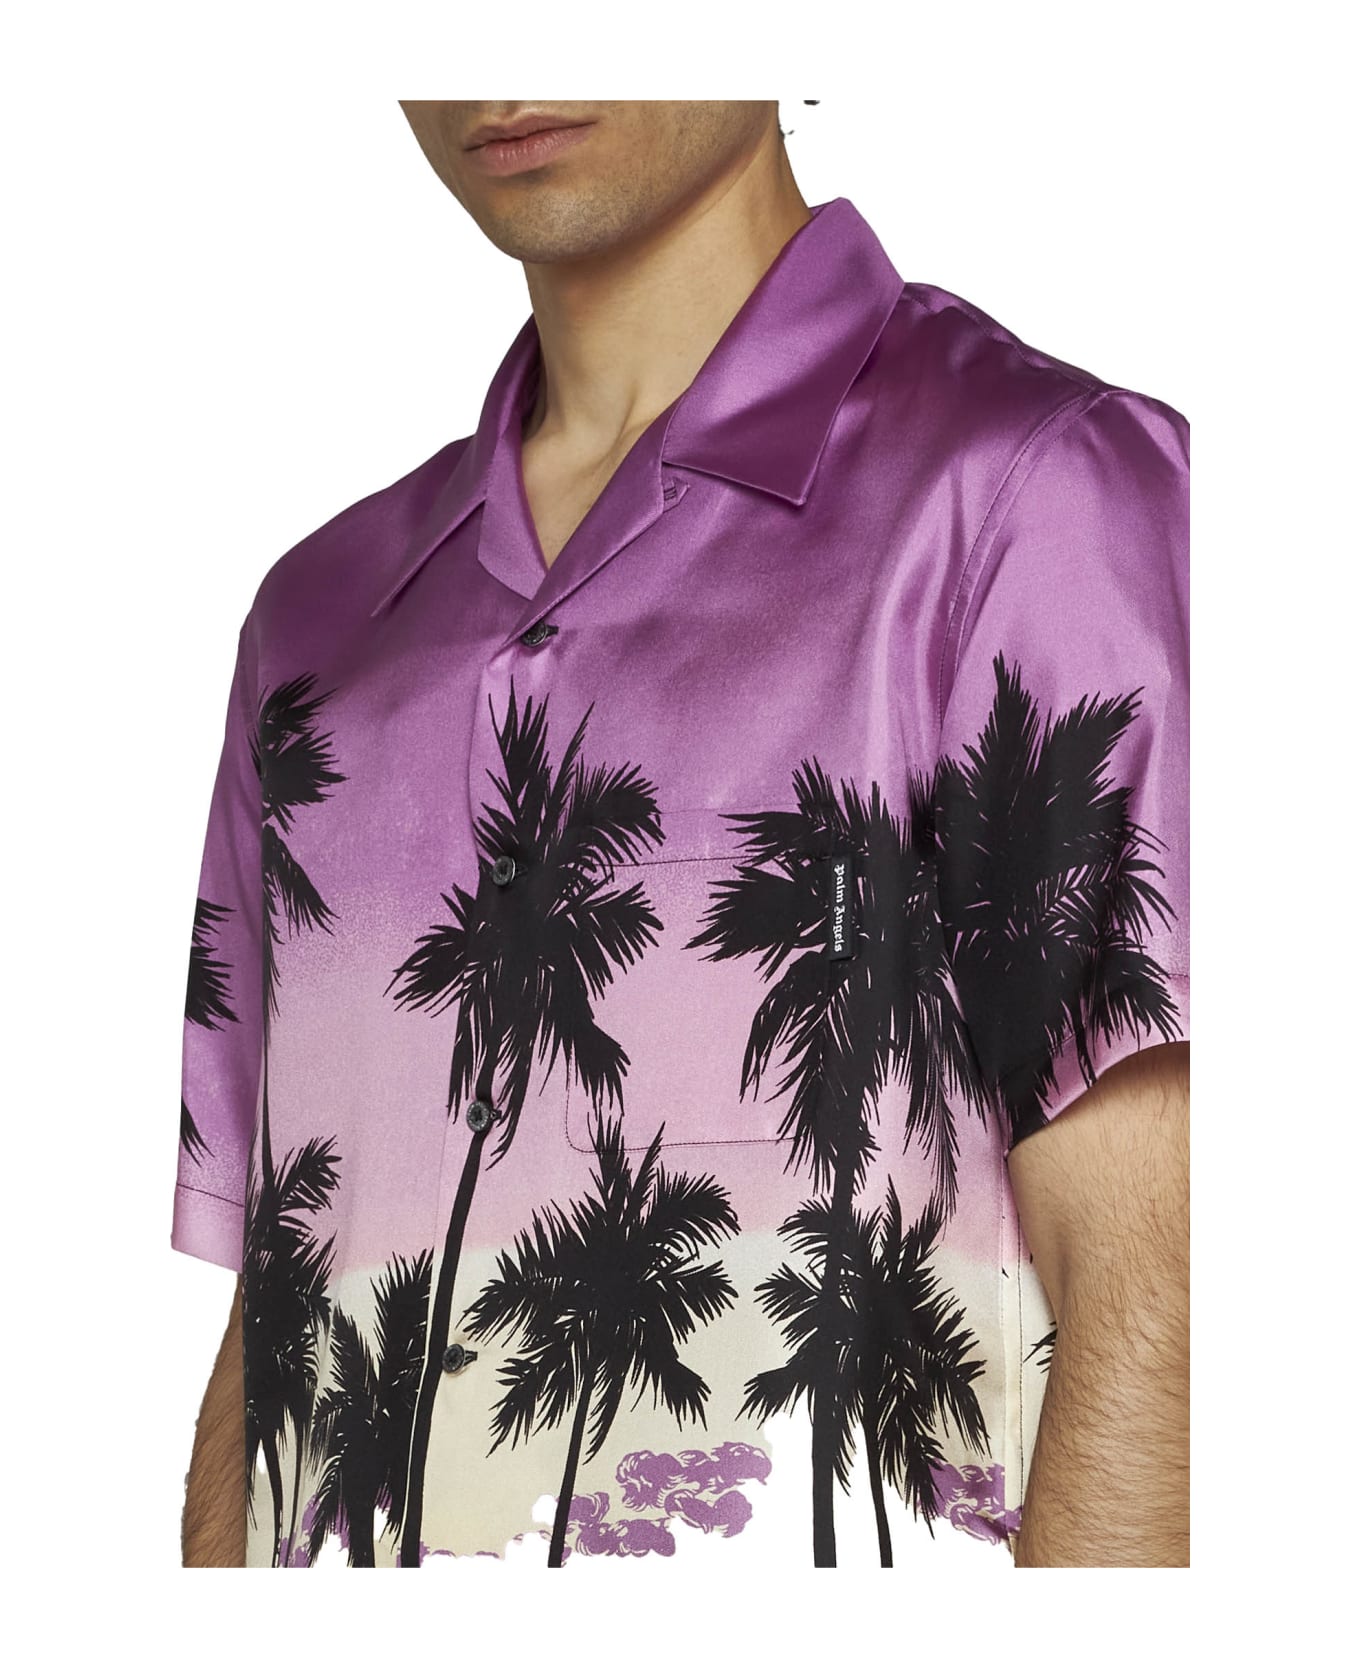 Palm Angels Bowling Shirt - Violet シャツ